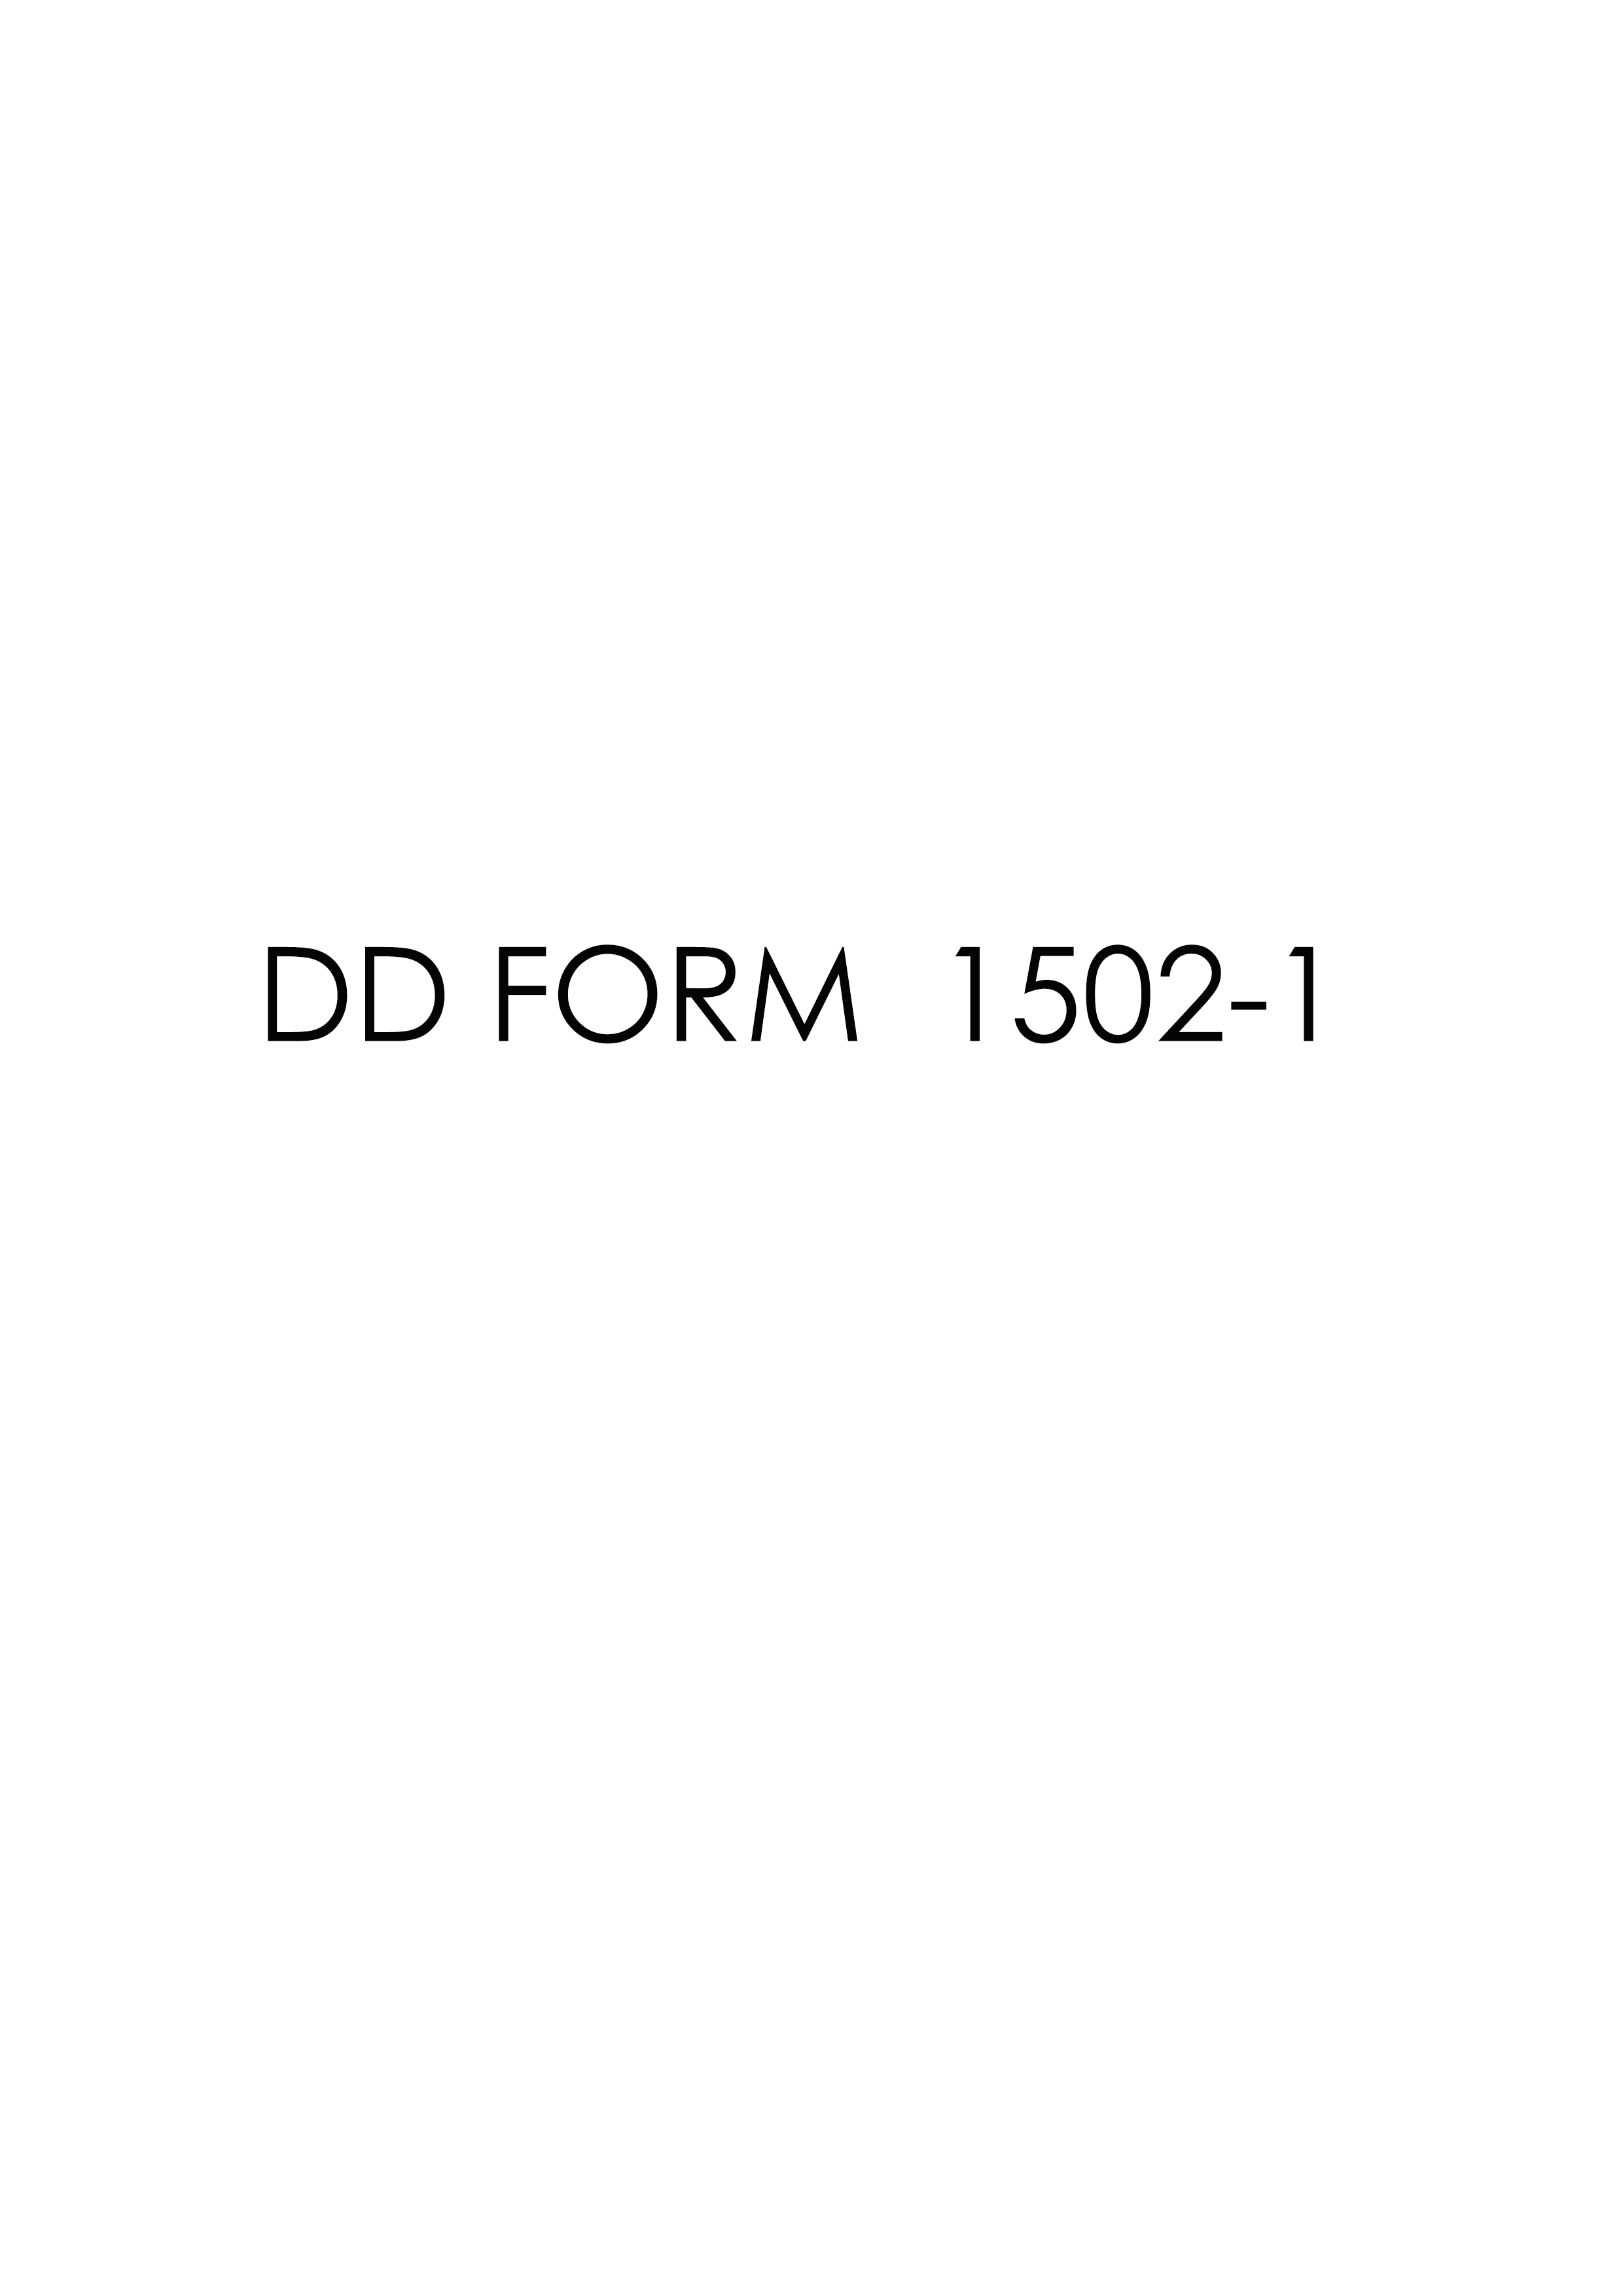 Download dd 1502-1 Form